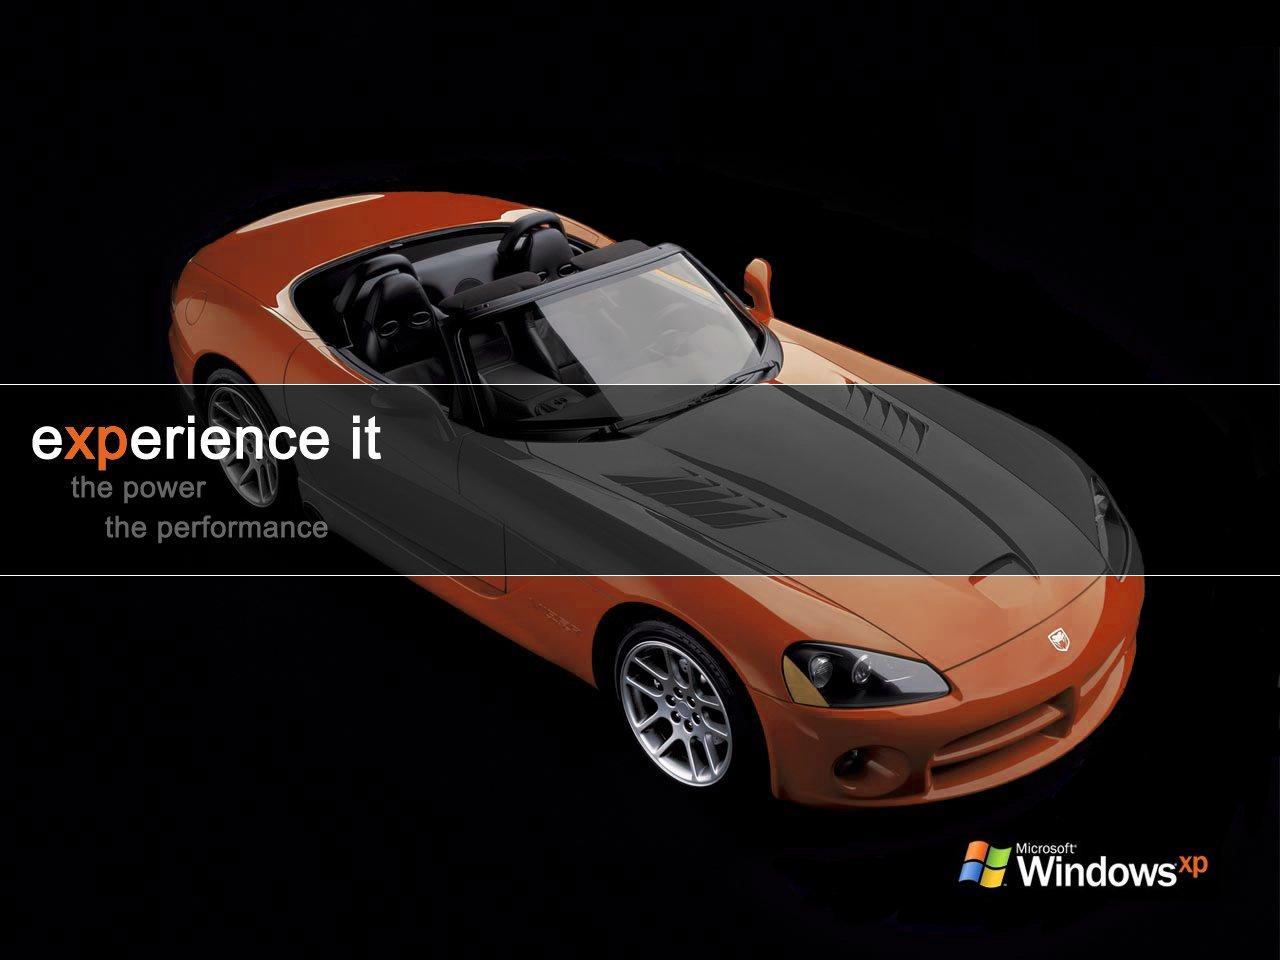 Wallpaper Theme Windows XP voiture